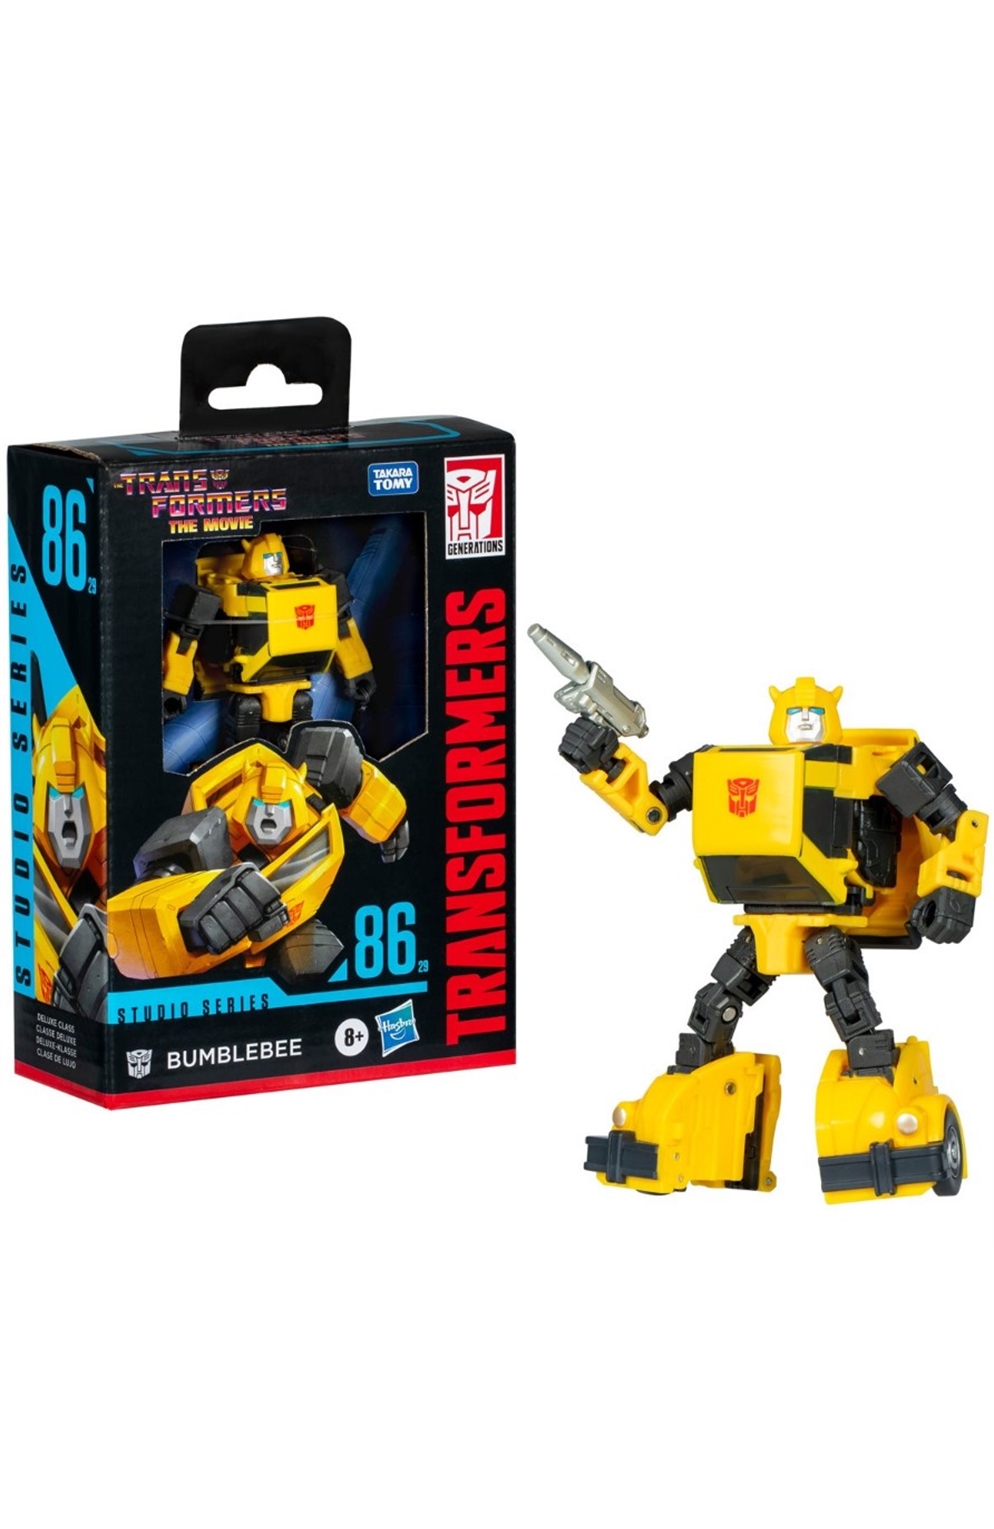 Transformers Studio Series Deluxe Transformers: The Movie 86 Bumblebee Action Figure